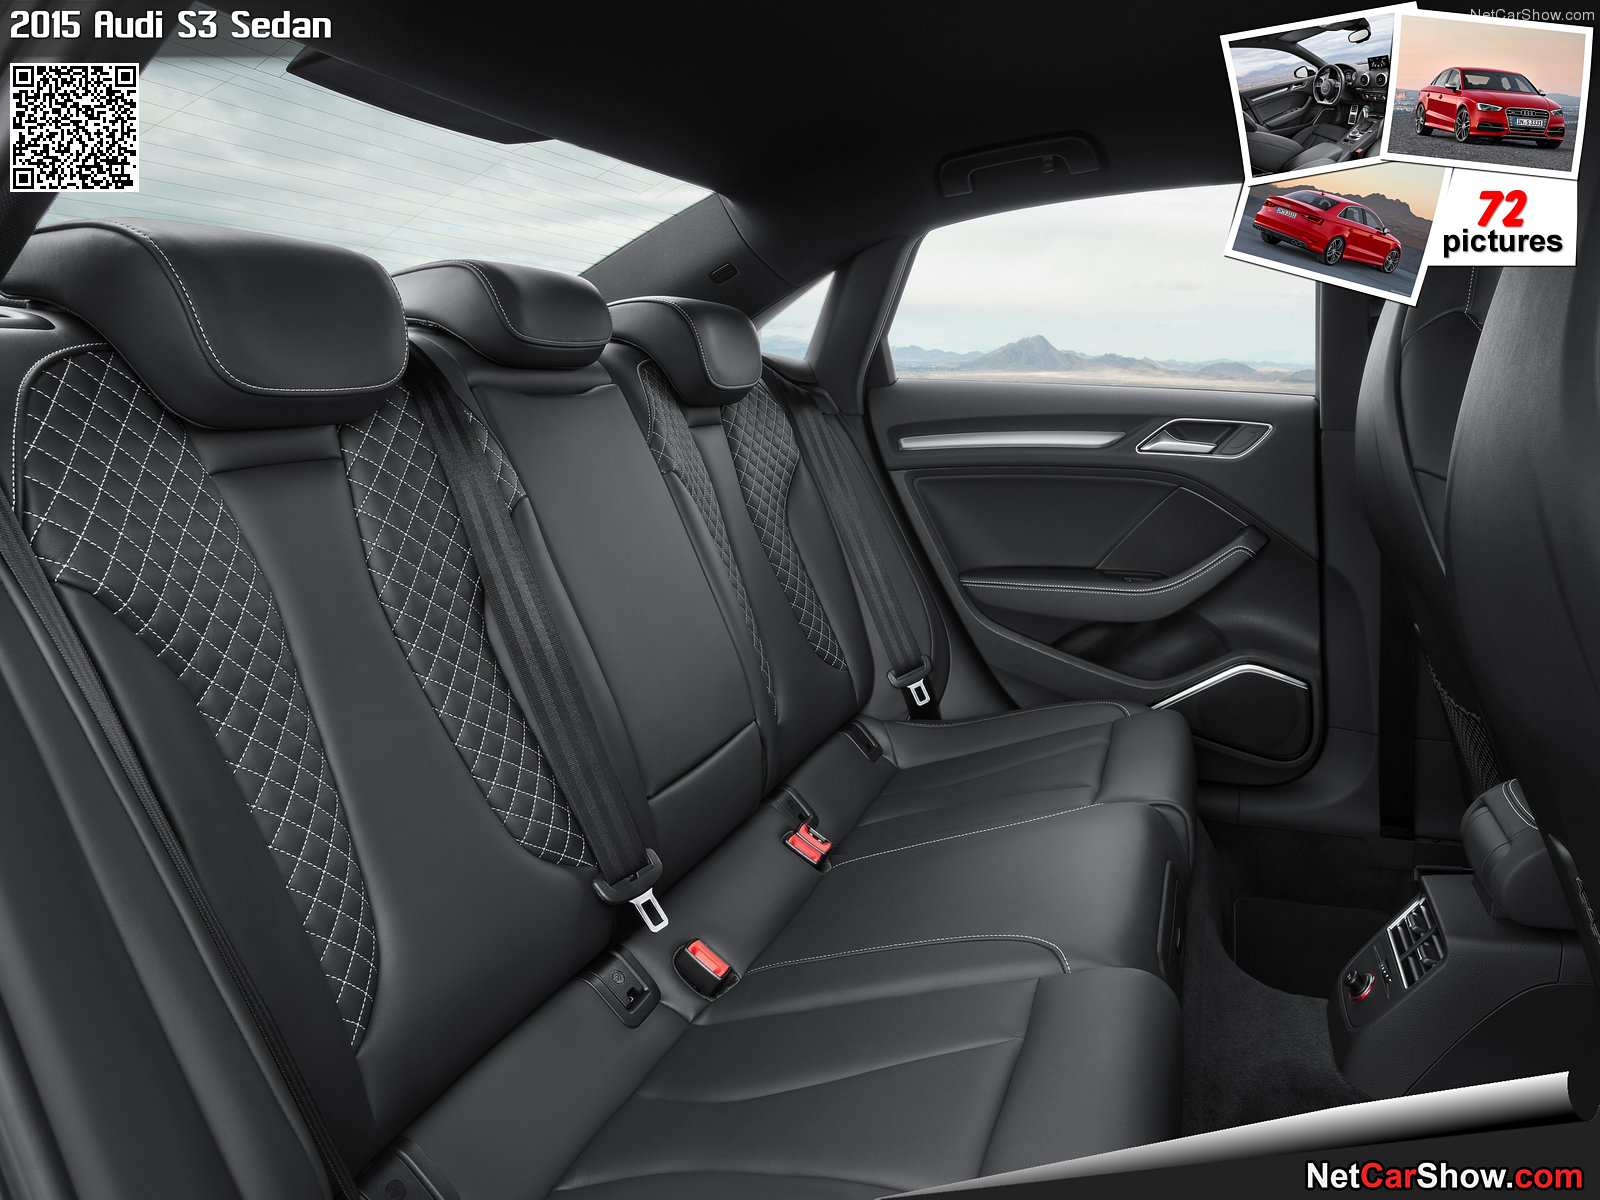 Audi-S3_Sedan_2015_1600x1200_wallpaper_2b.jpg